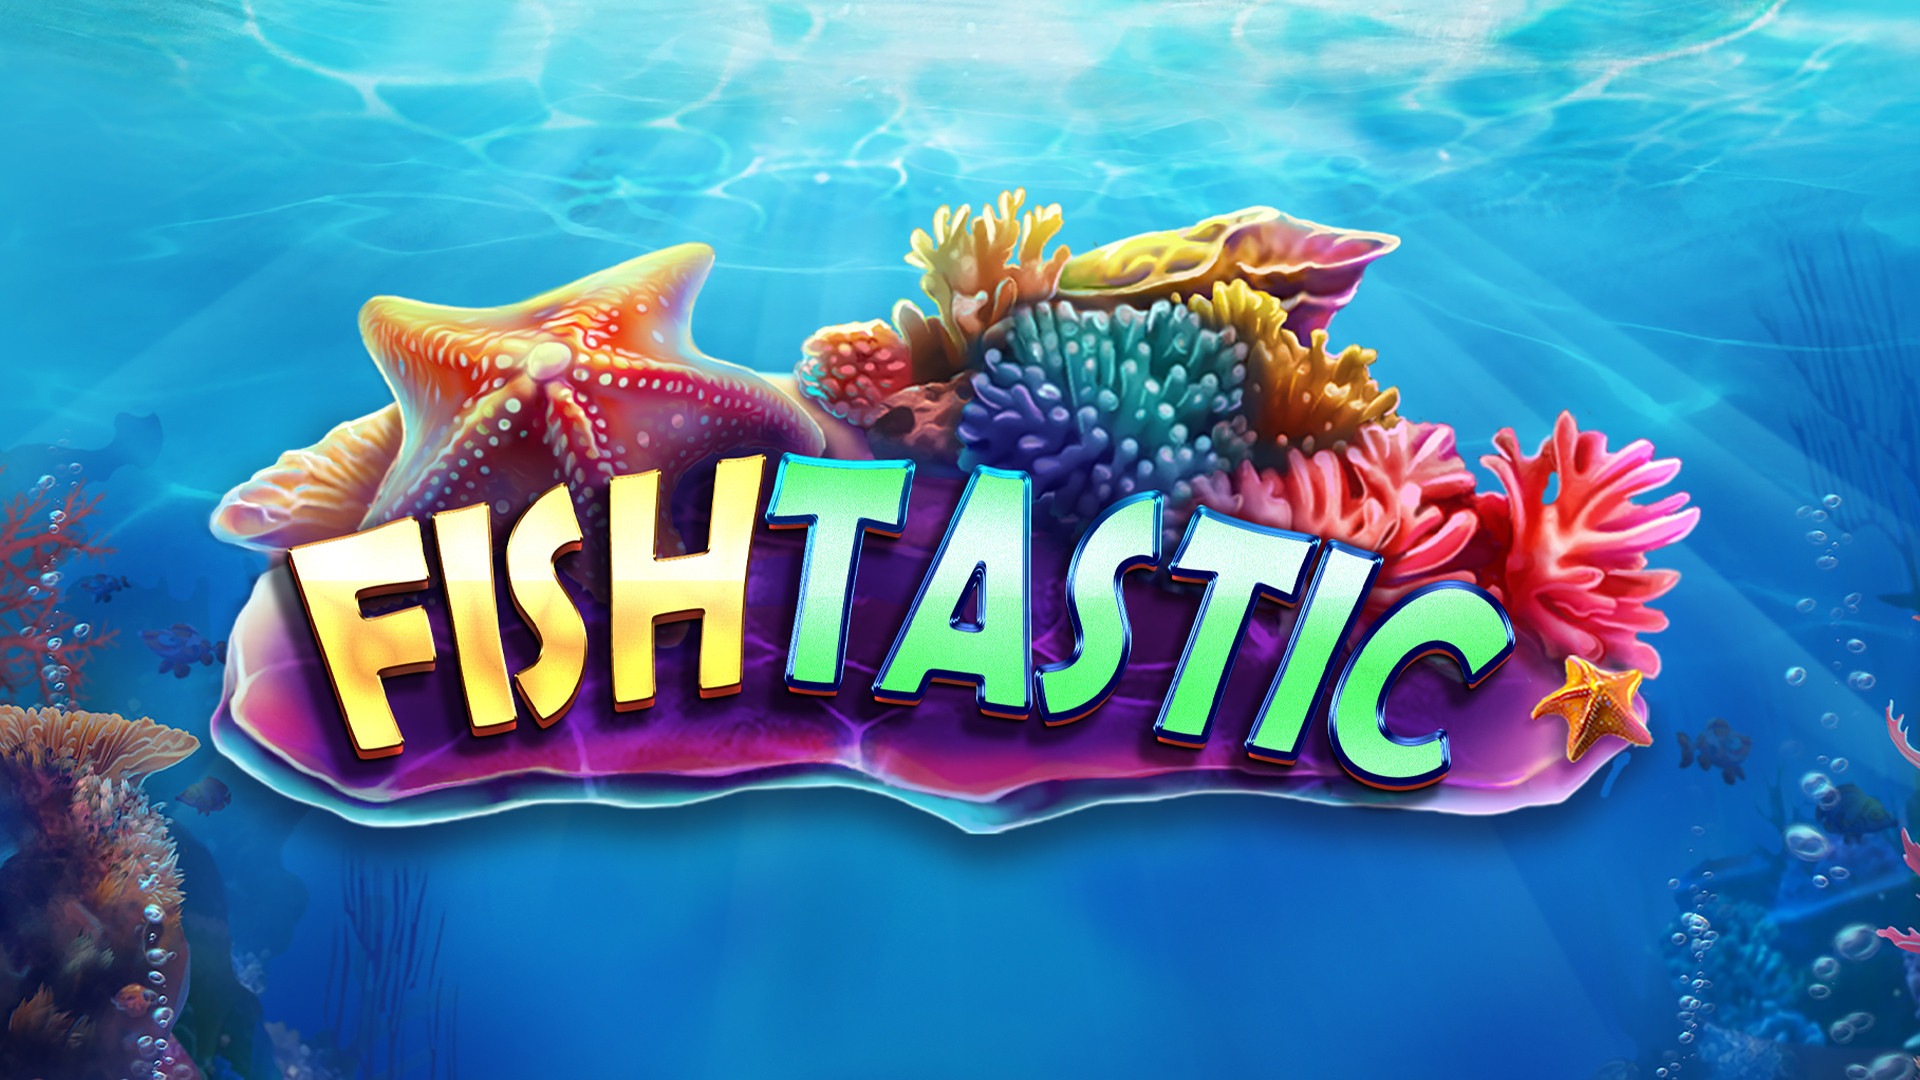 Fishtastic